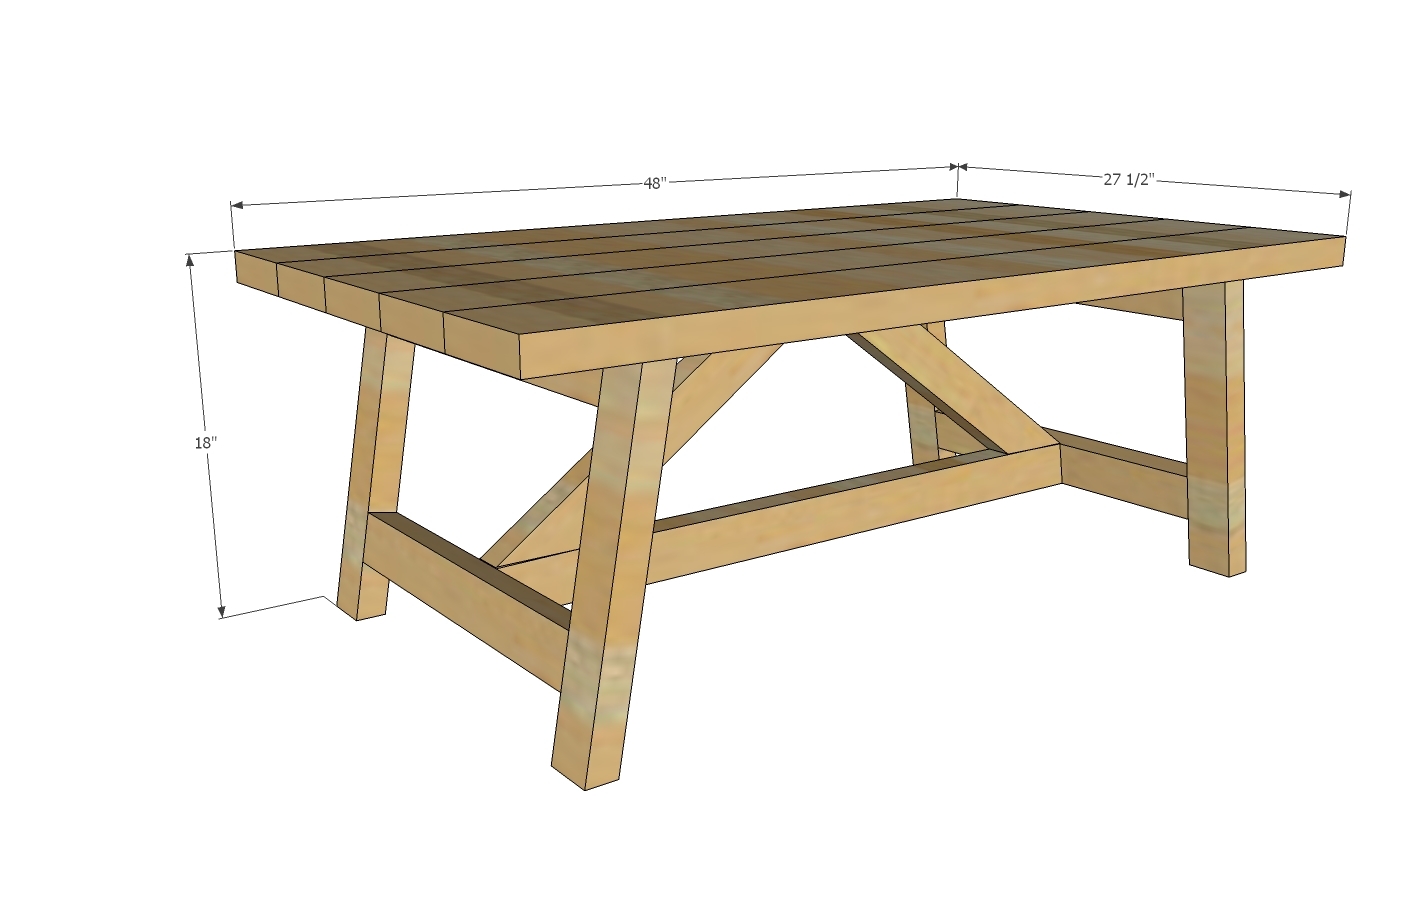 wood table designs plans photo - 1